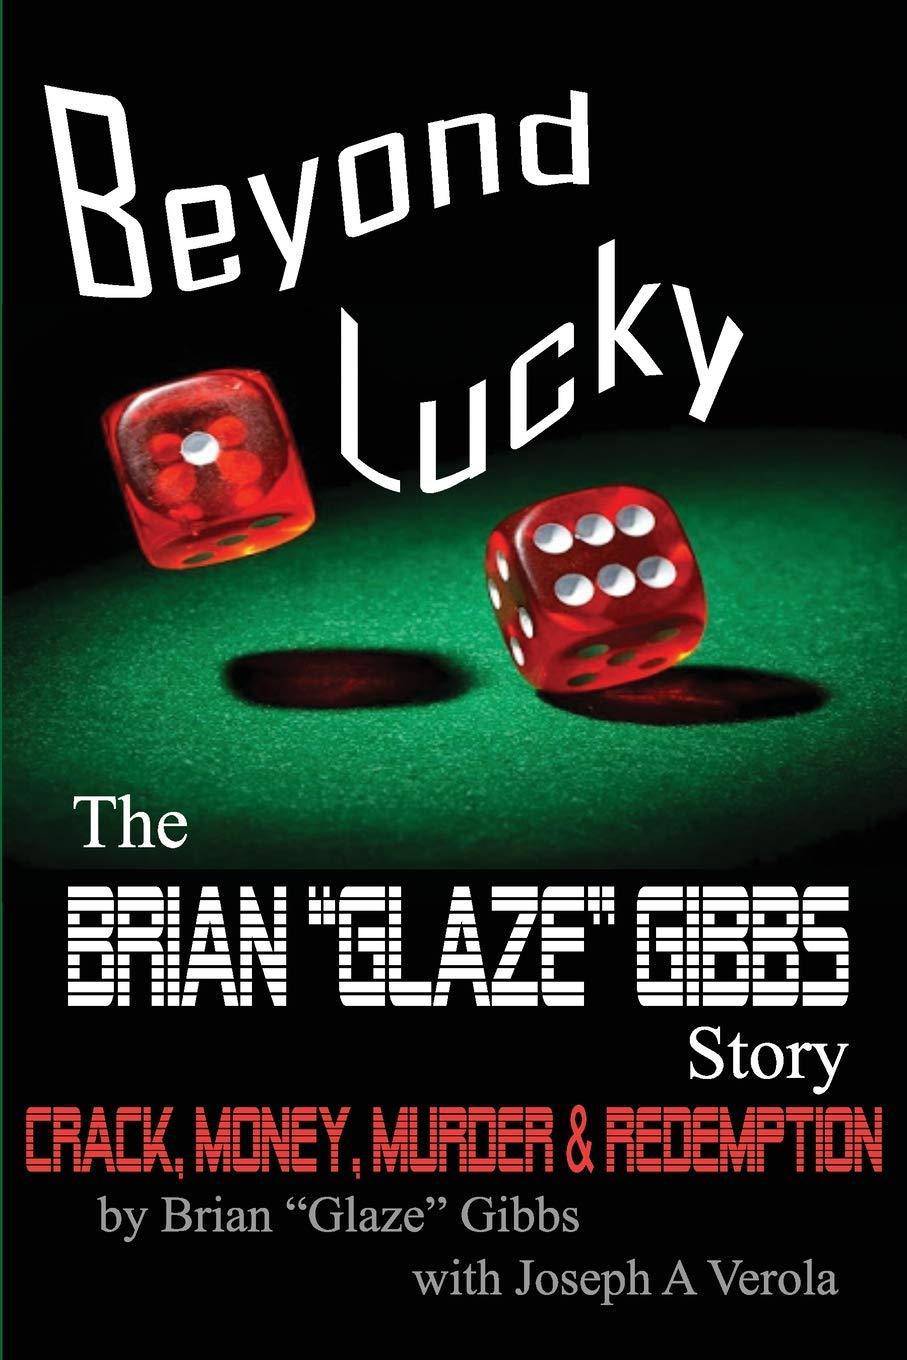 The Brian "Gibbs" Glaze Story - SureShot Books Publishing LLC